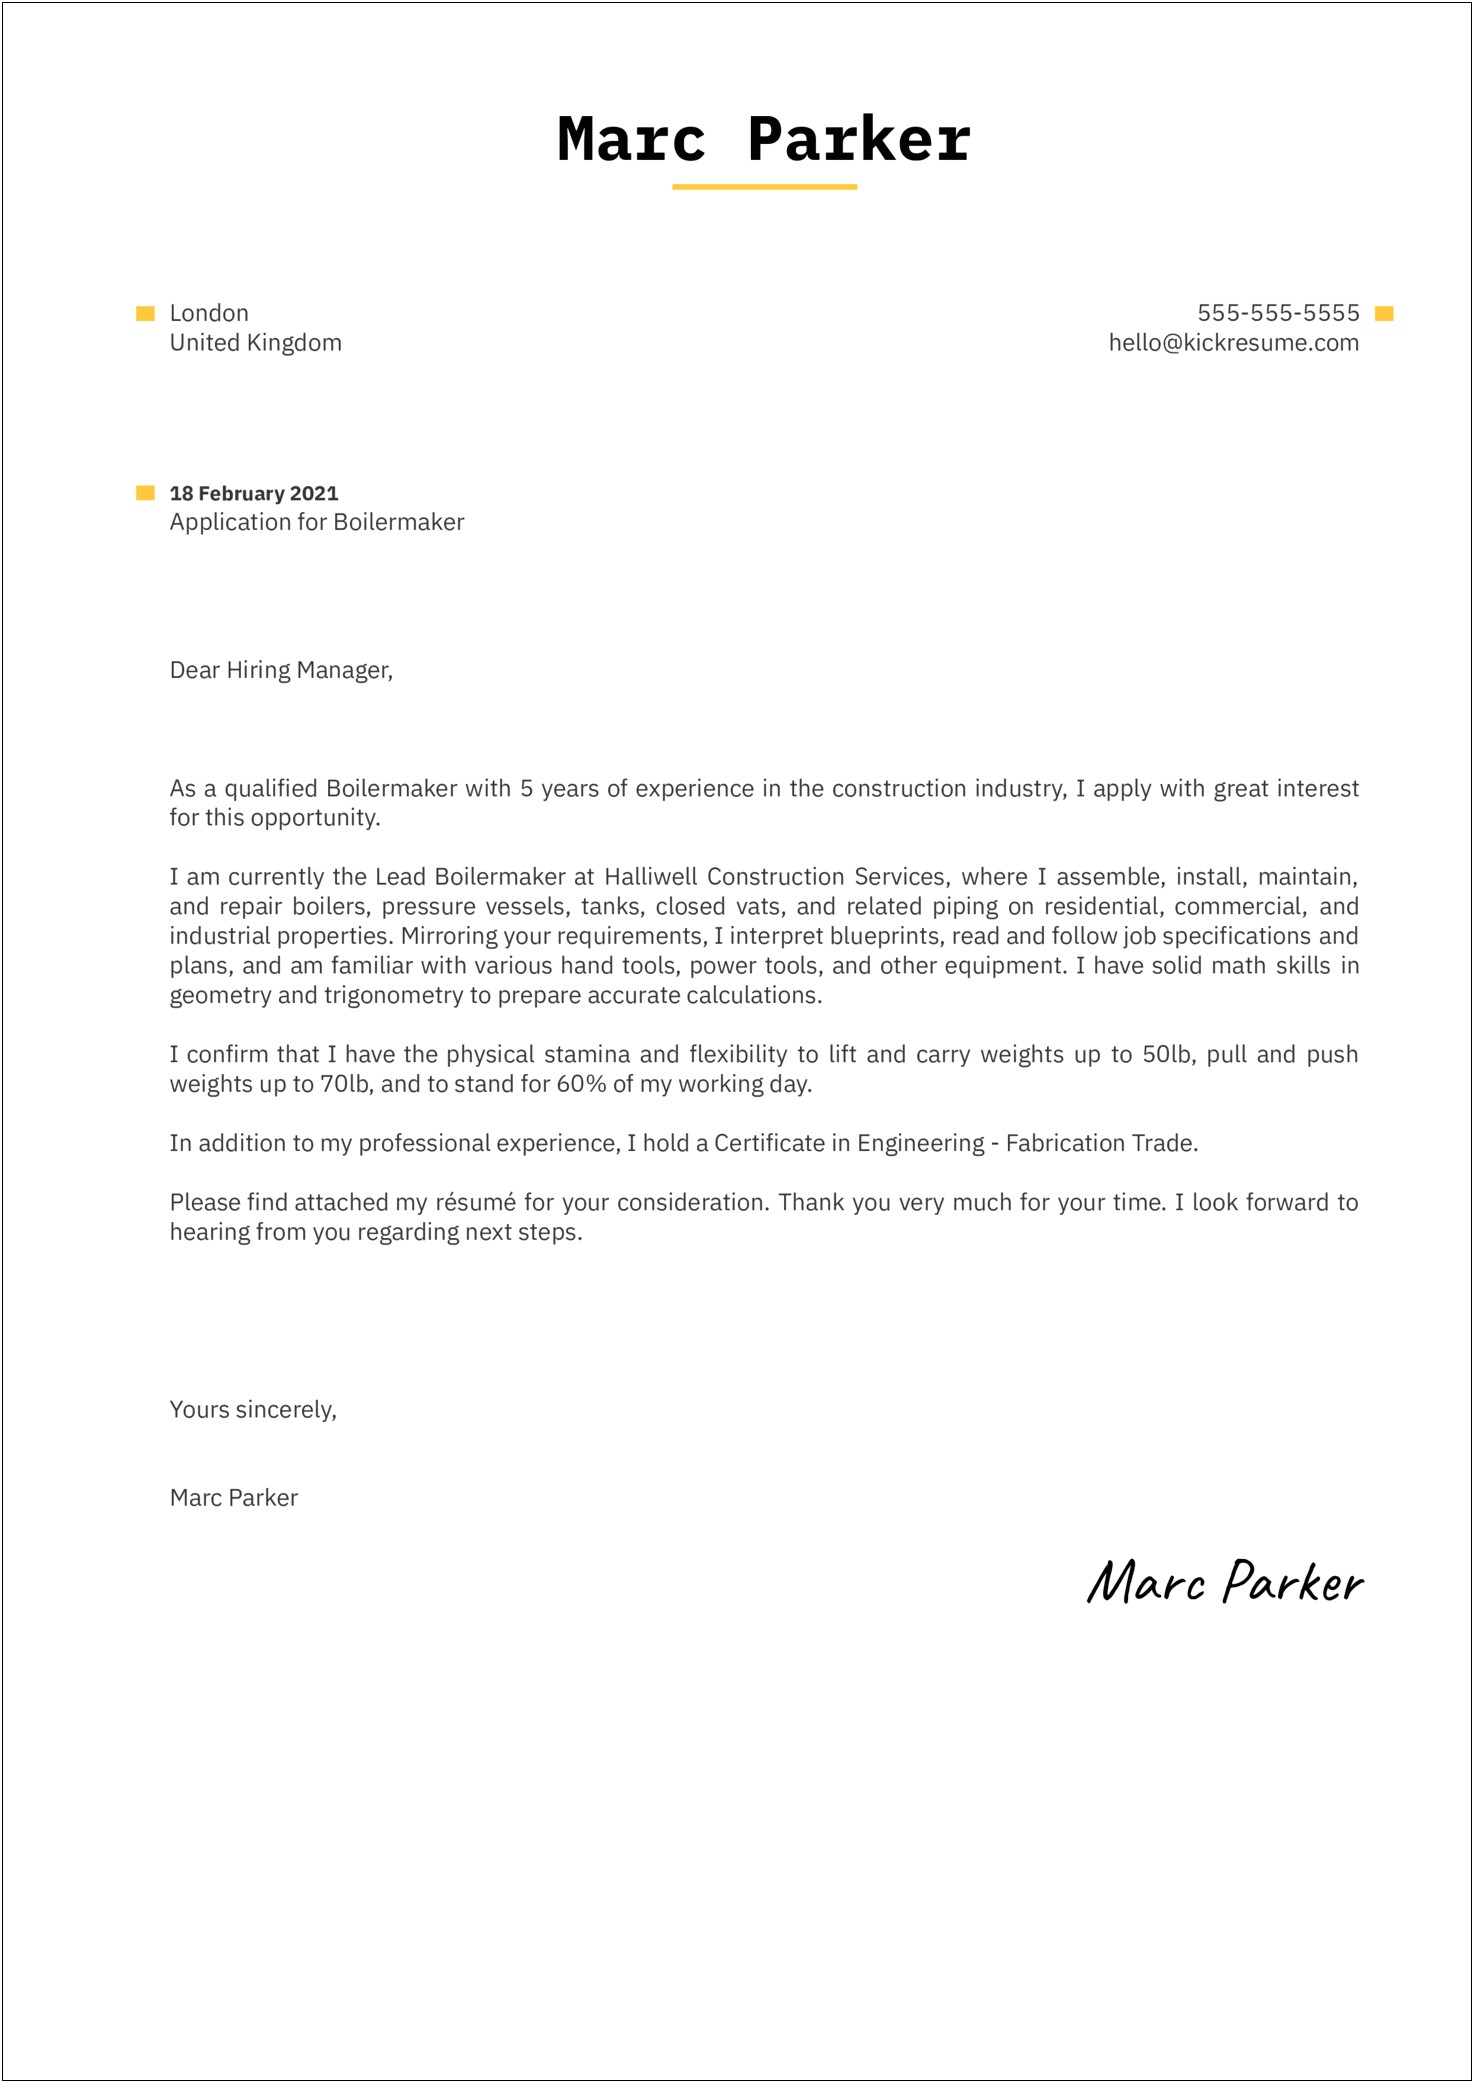 Example Of Cover Letter For Resume For Welder